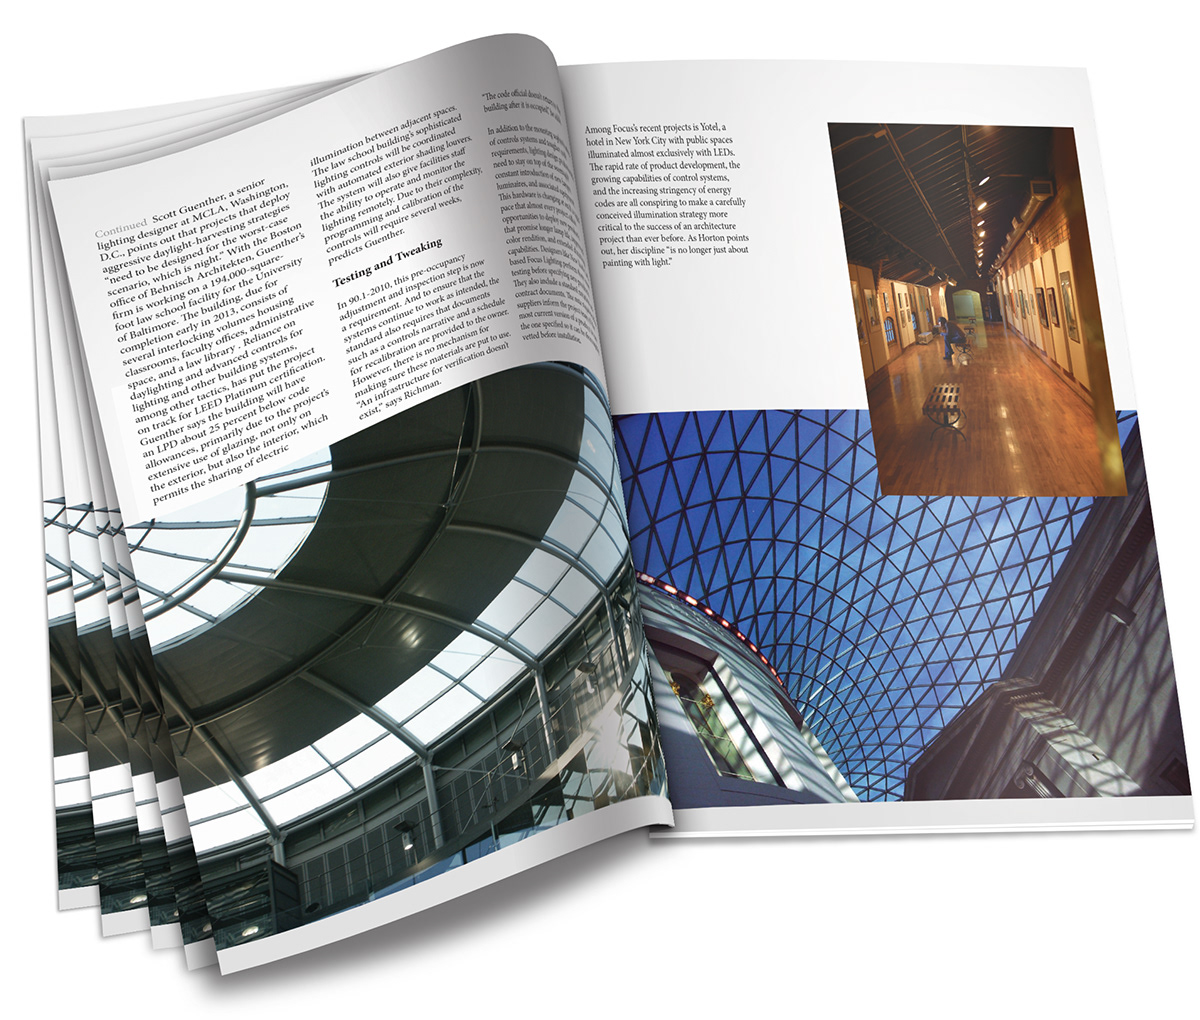 arkitekt magazine magazine spread article lighting challenges opportunities